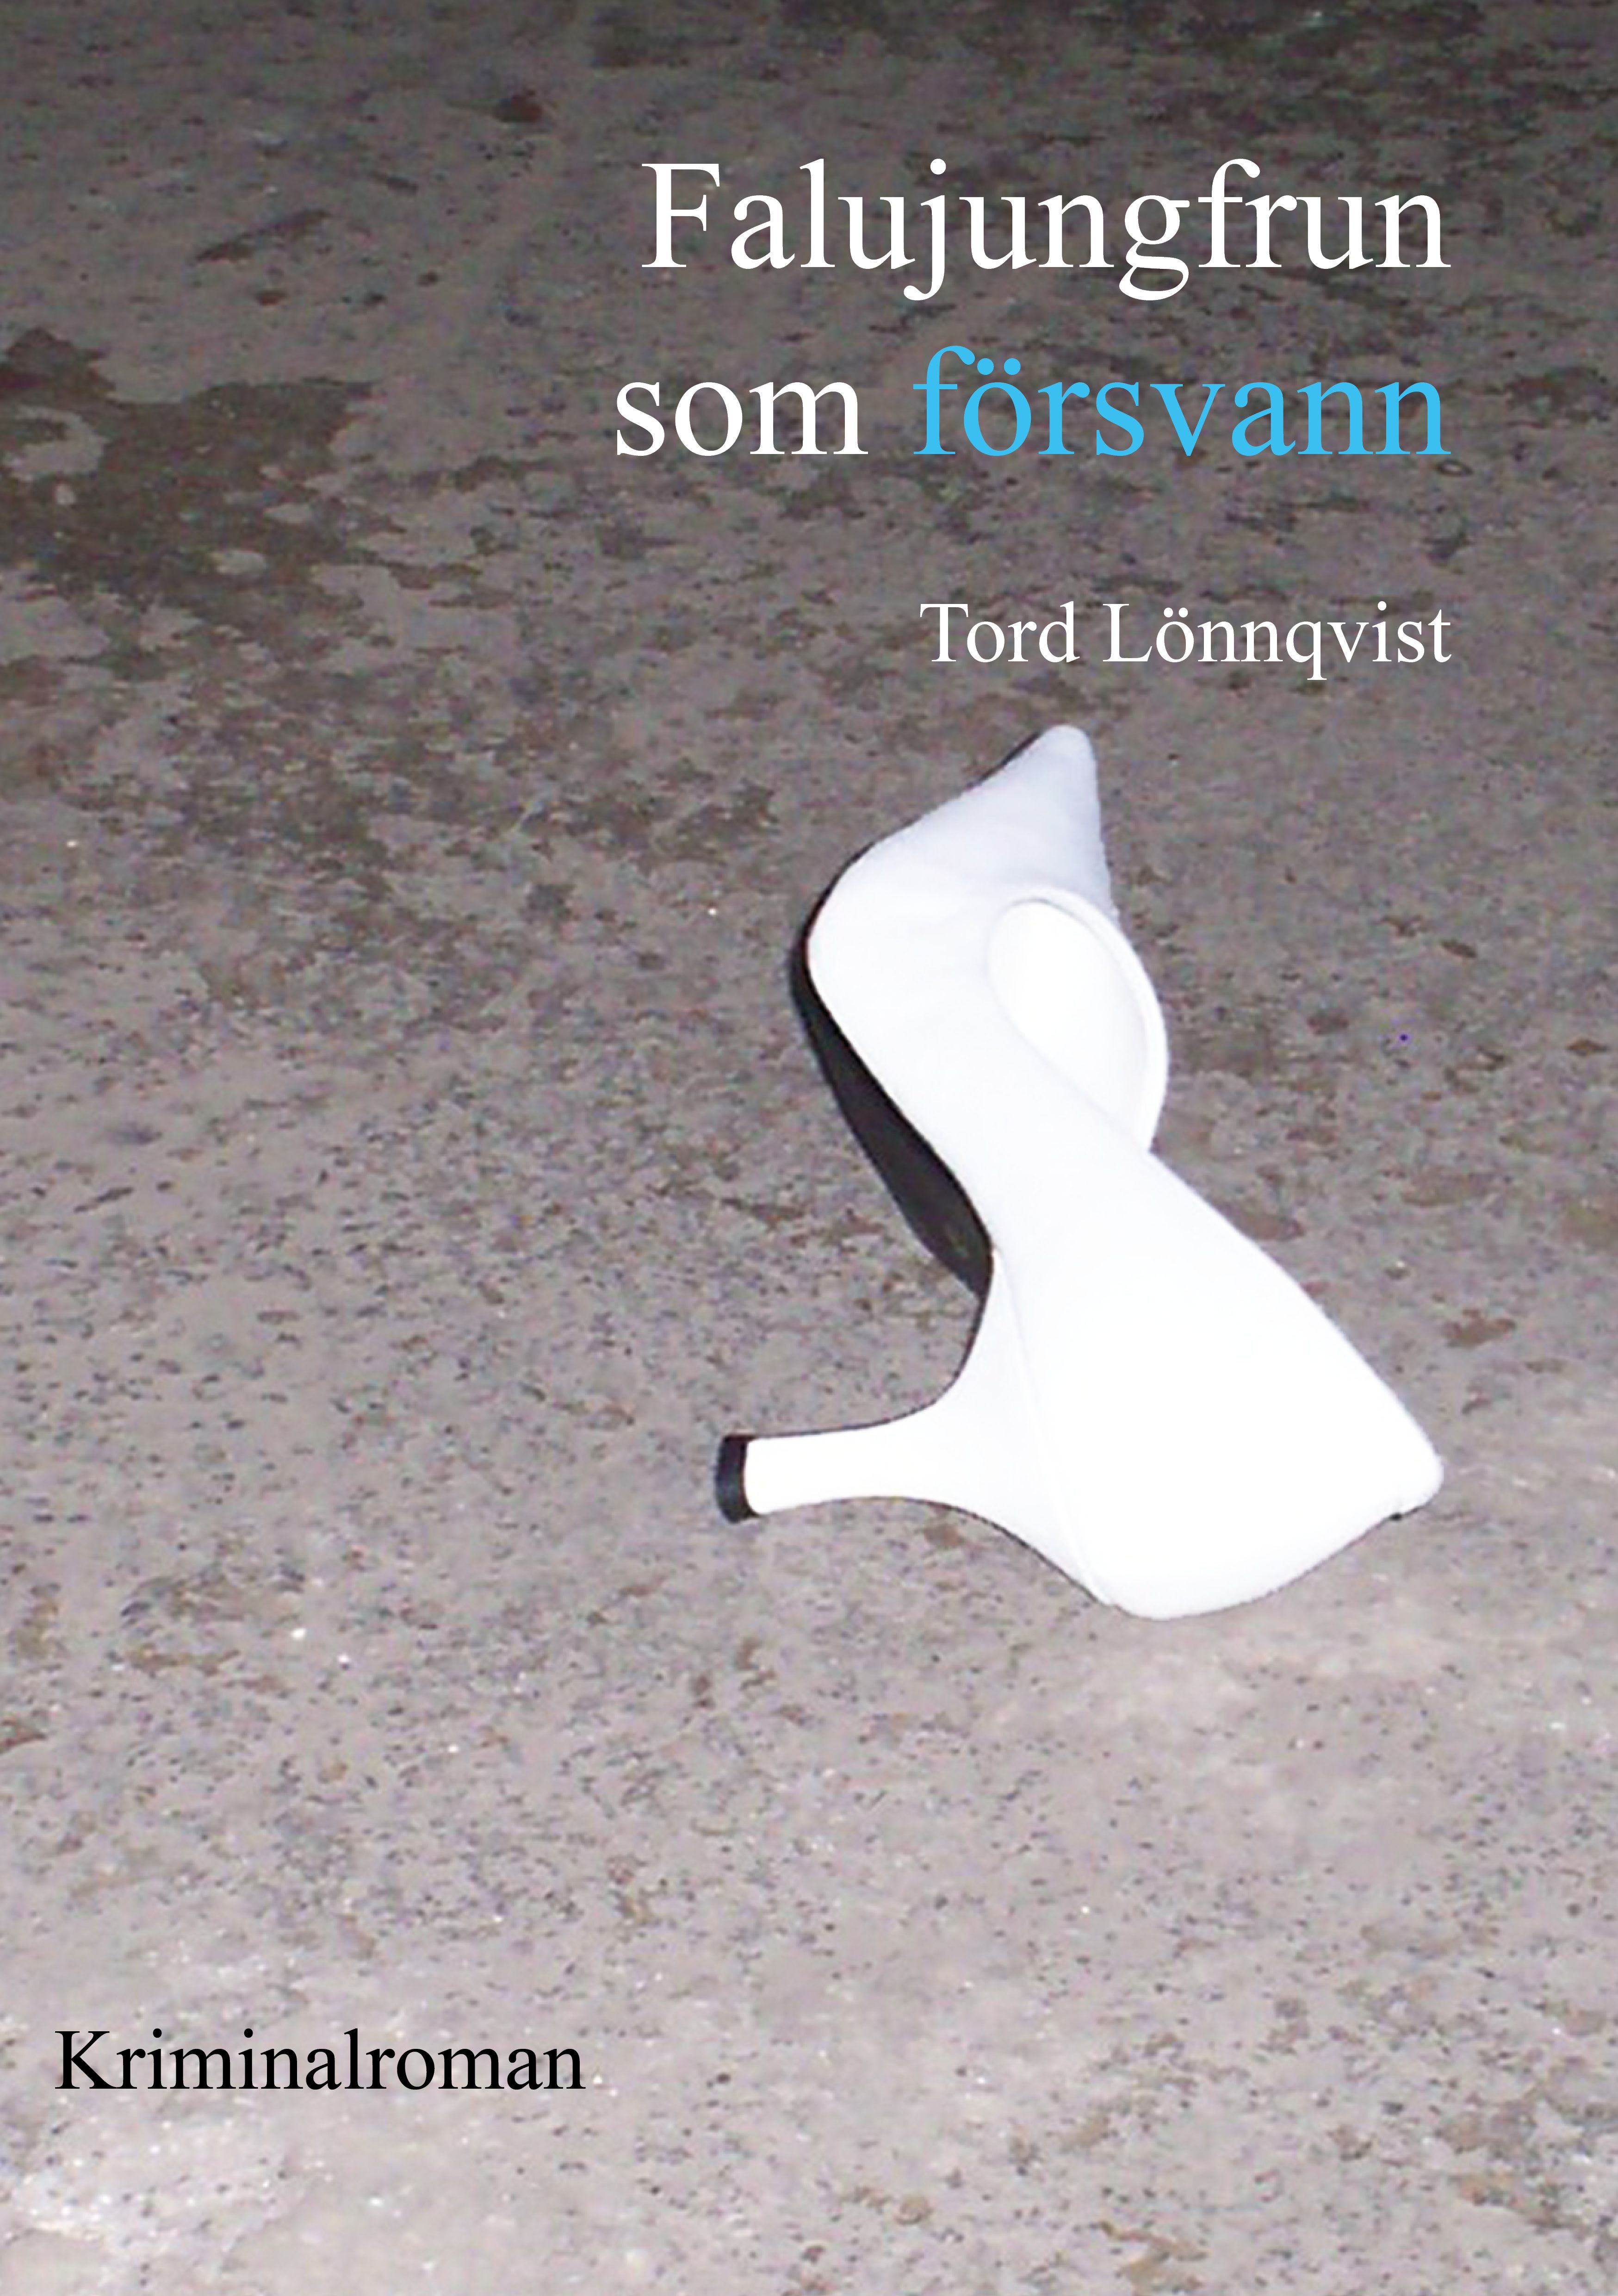 Falujungfrun som försvann, e-bok av Tord Lönnqvist